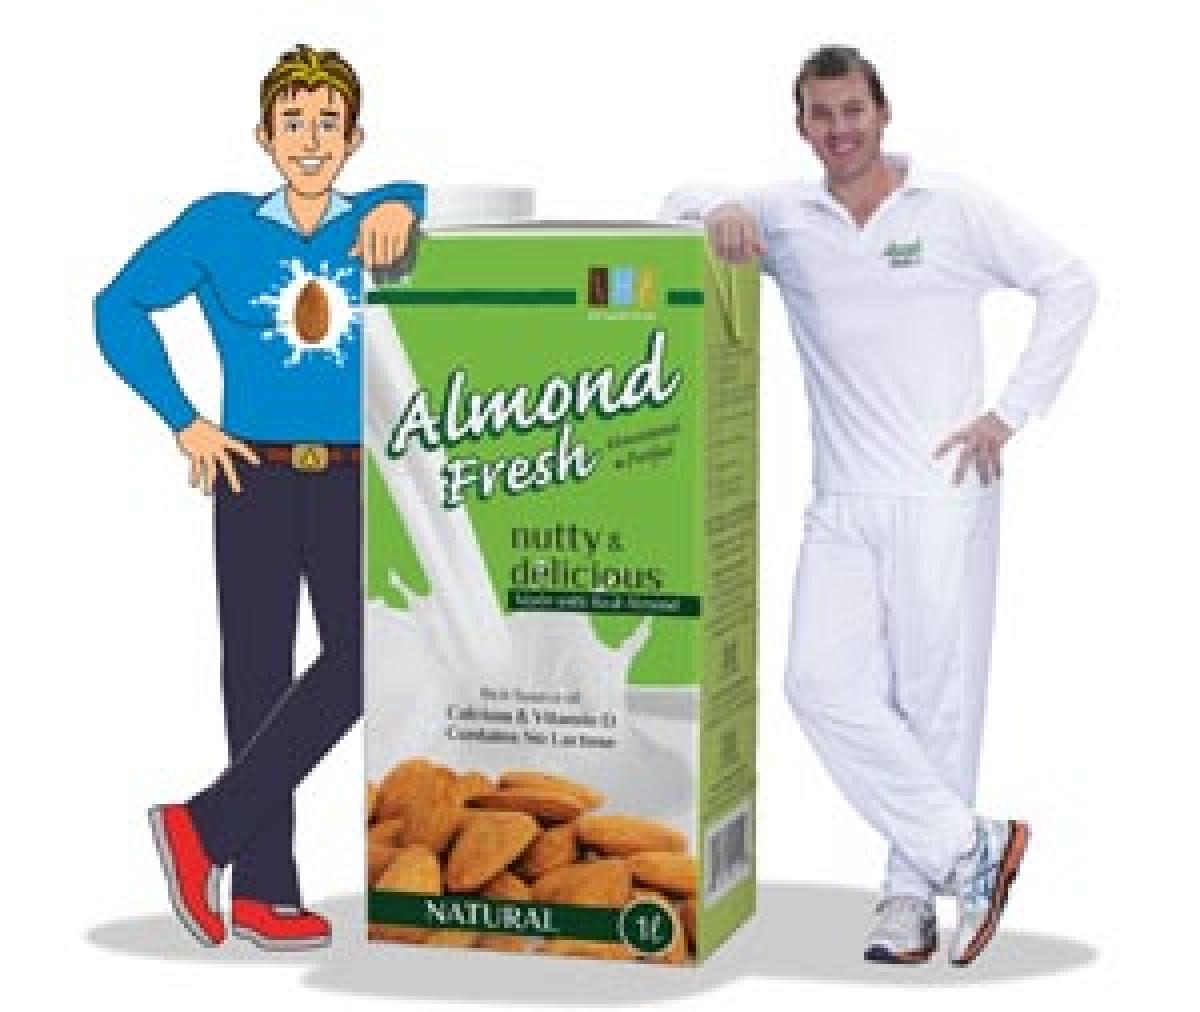 Now enjoy Almond Fresh in India with Brett Lee